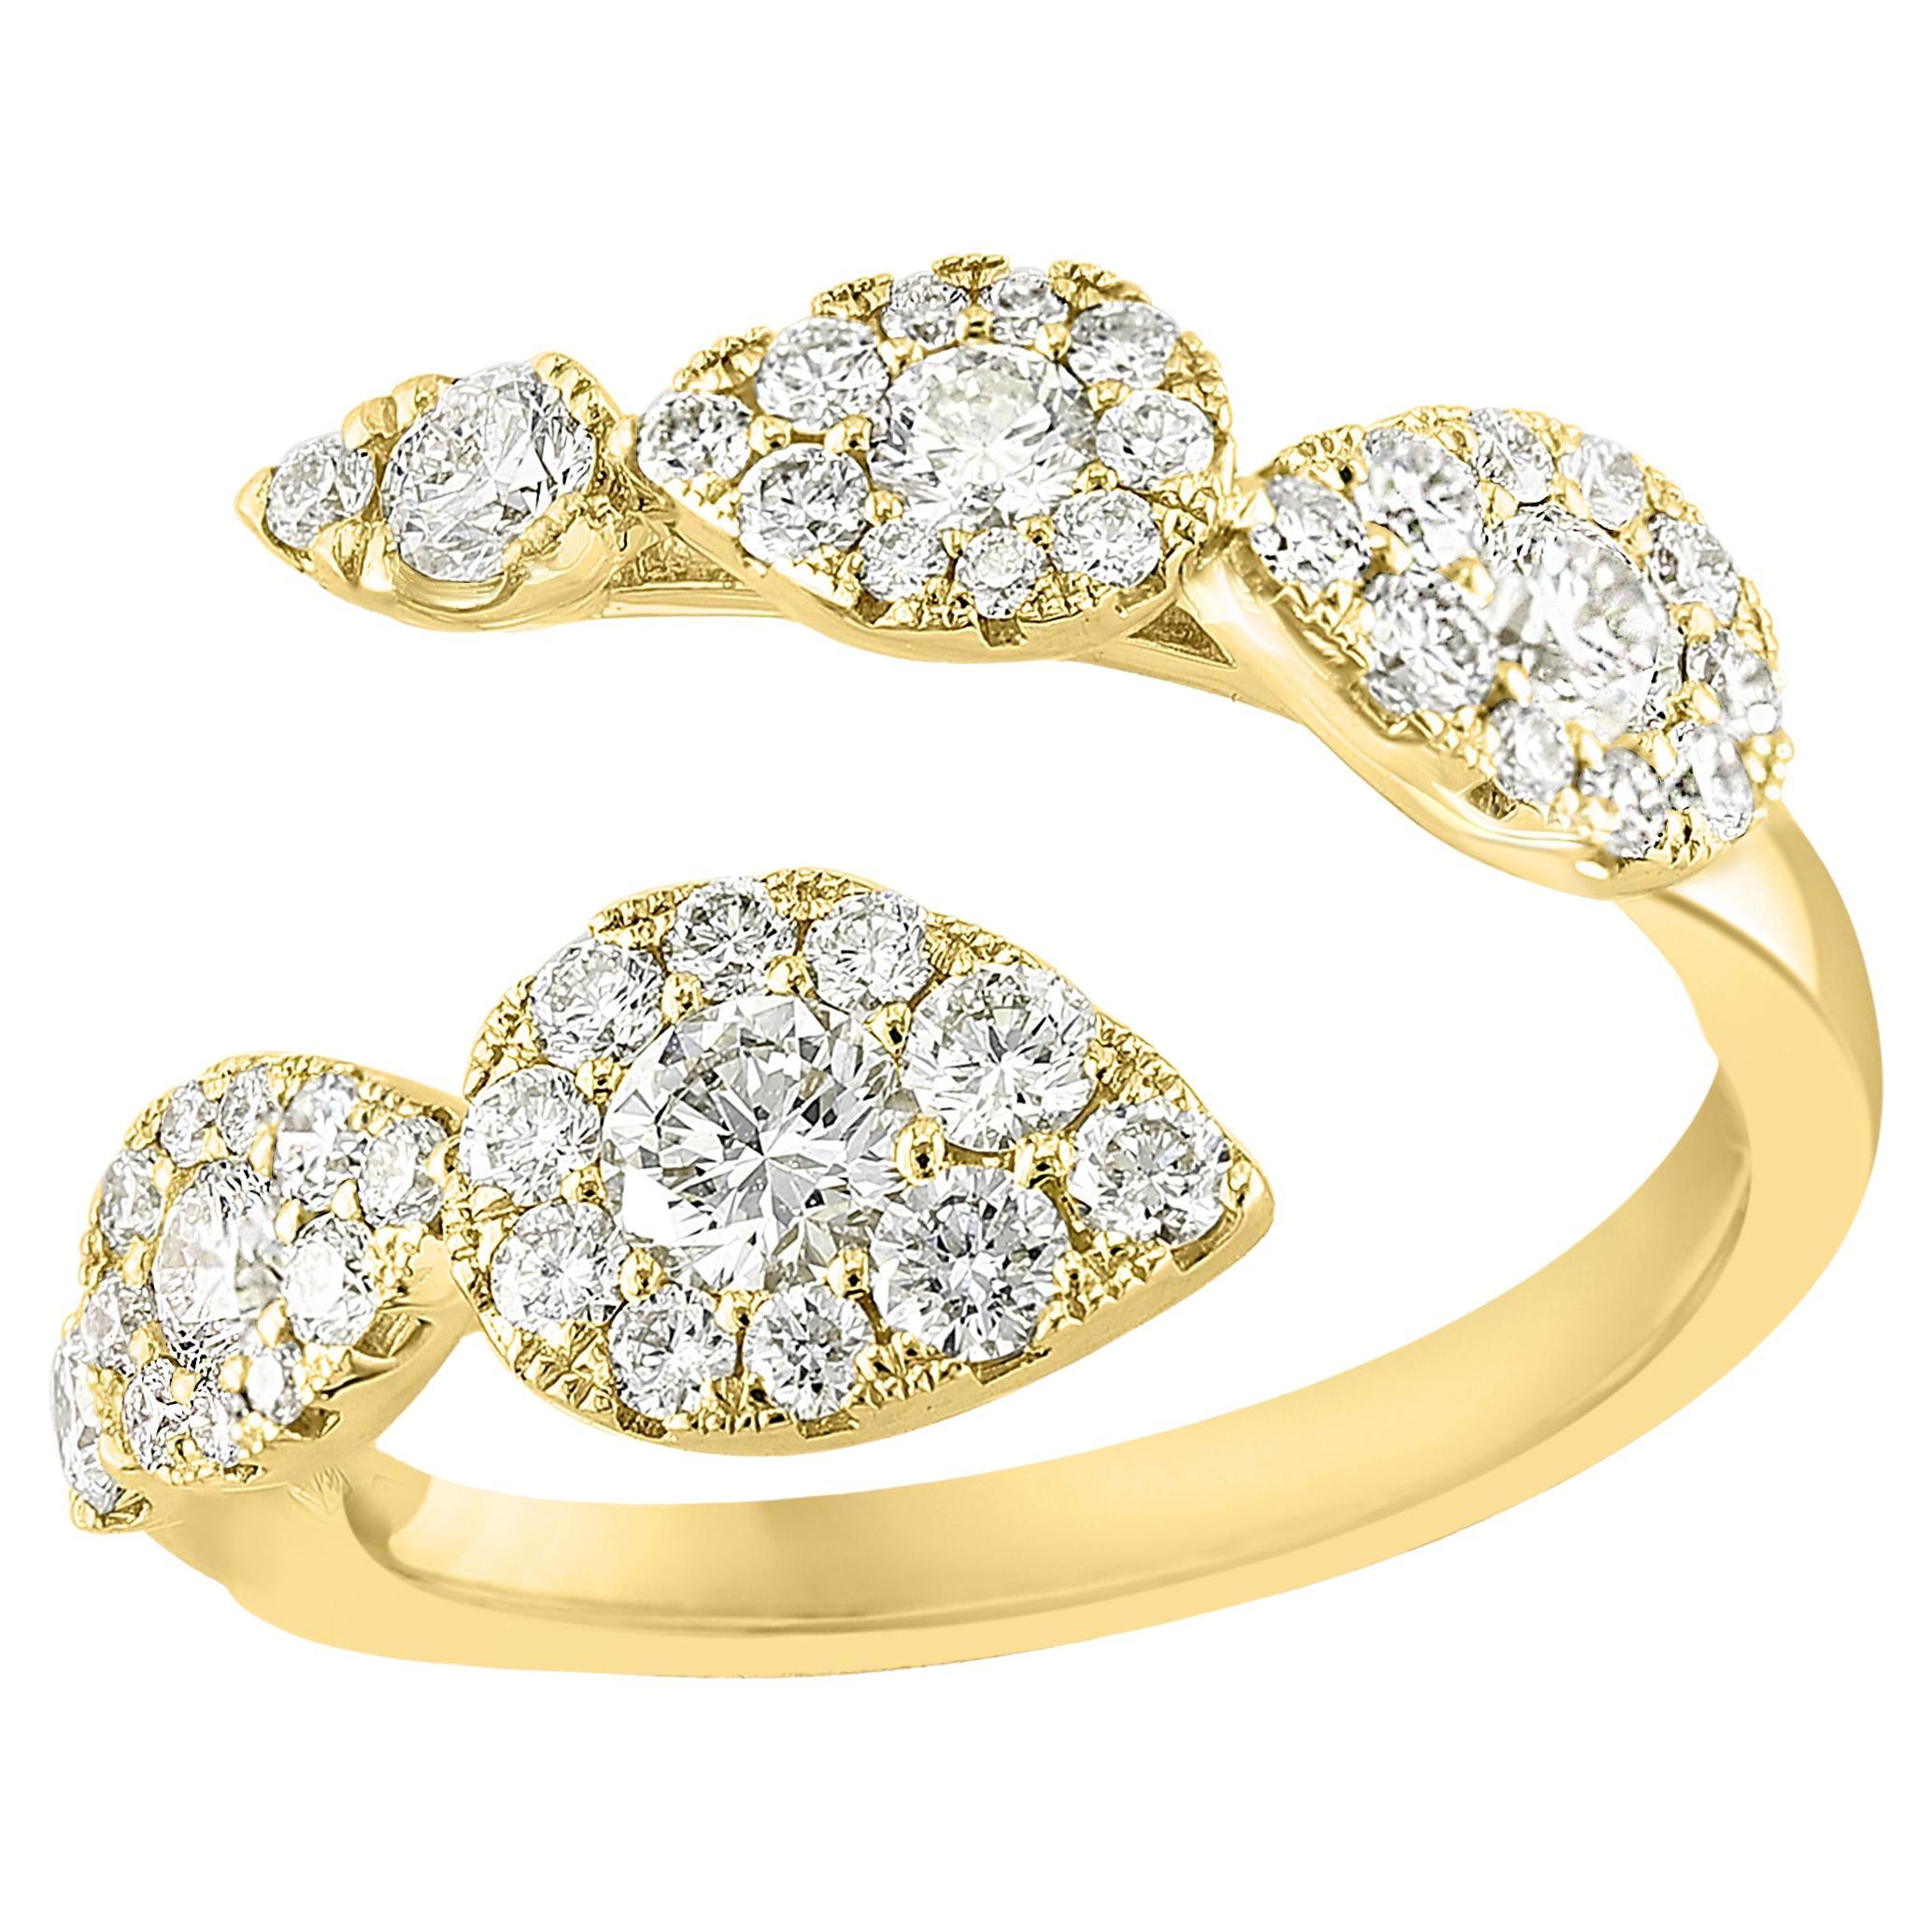 1.15 Carat Brilliant Cut Diamond Toi et Moi Ring 18K Yellow Gold